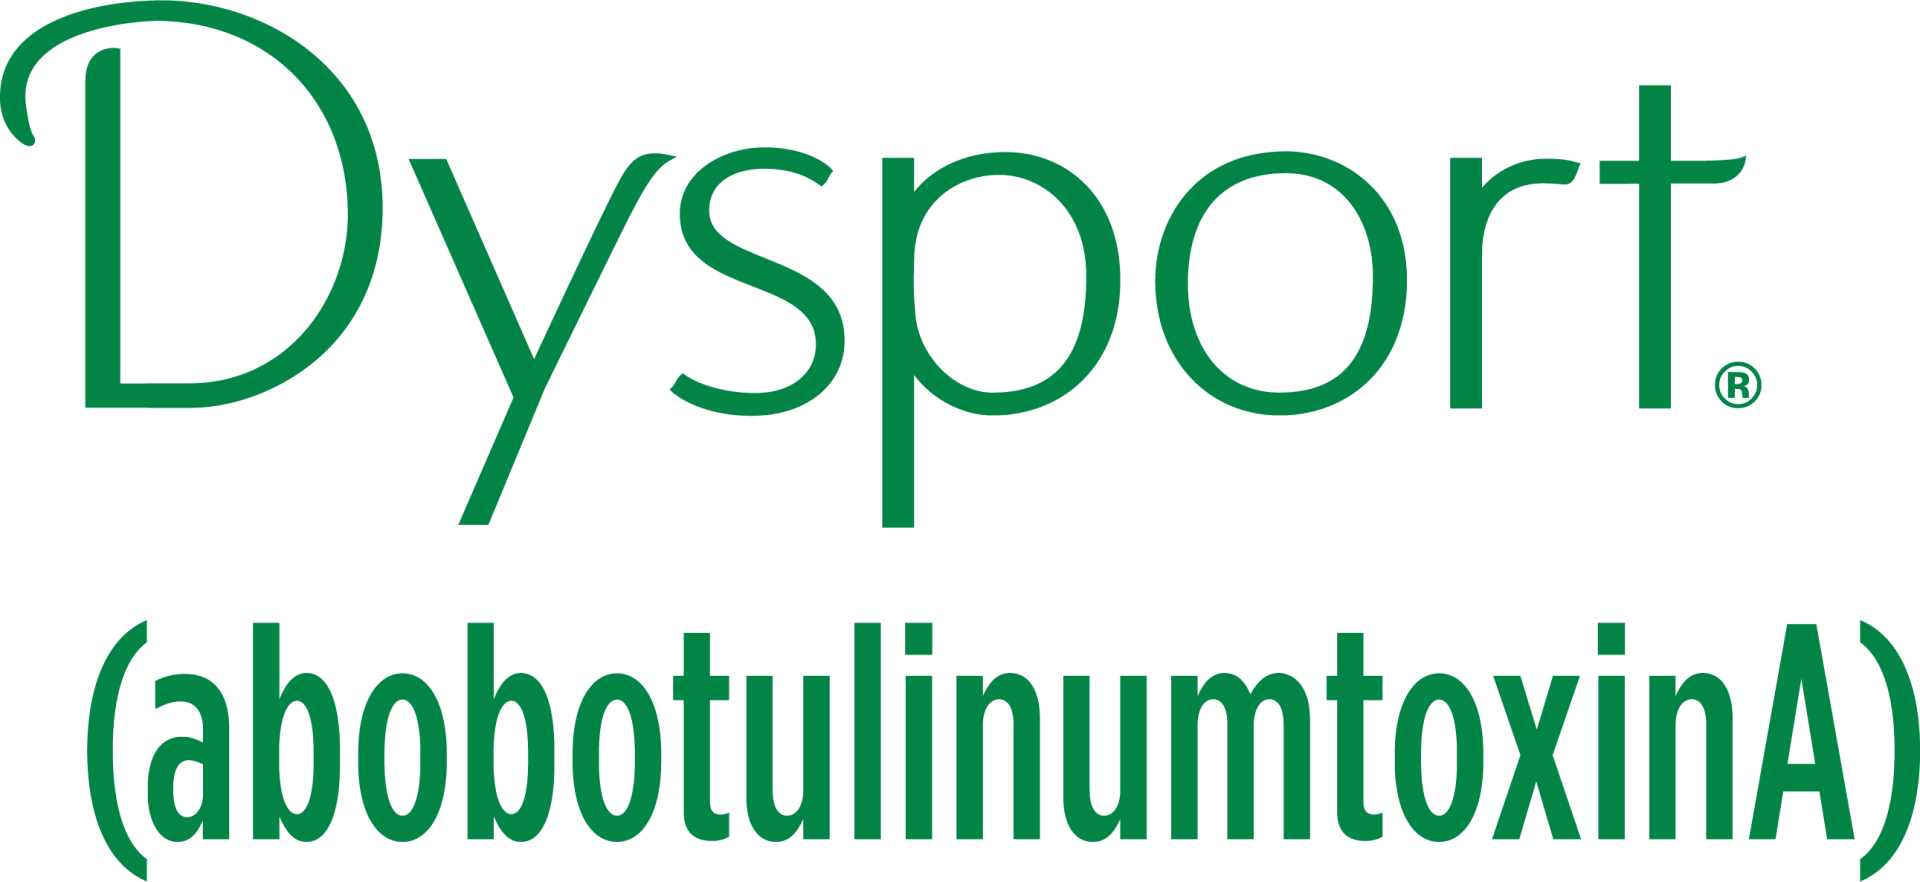 logo for Dysport abotulinumtoxinA injection